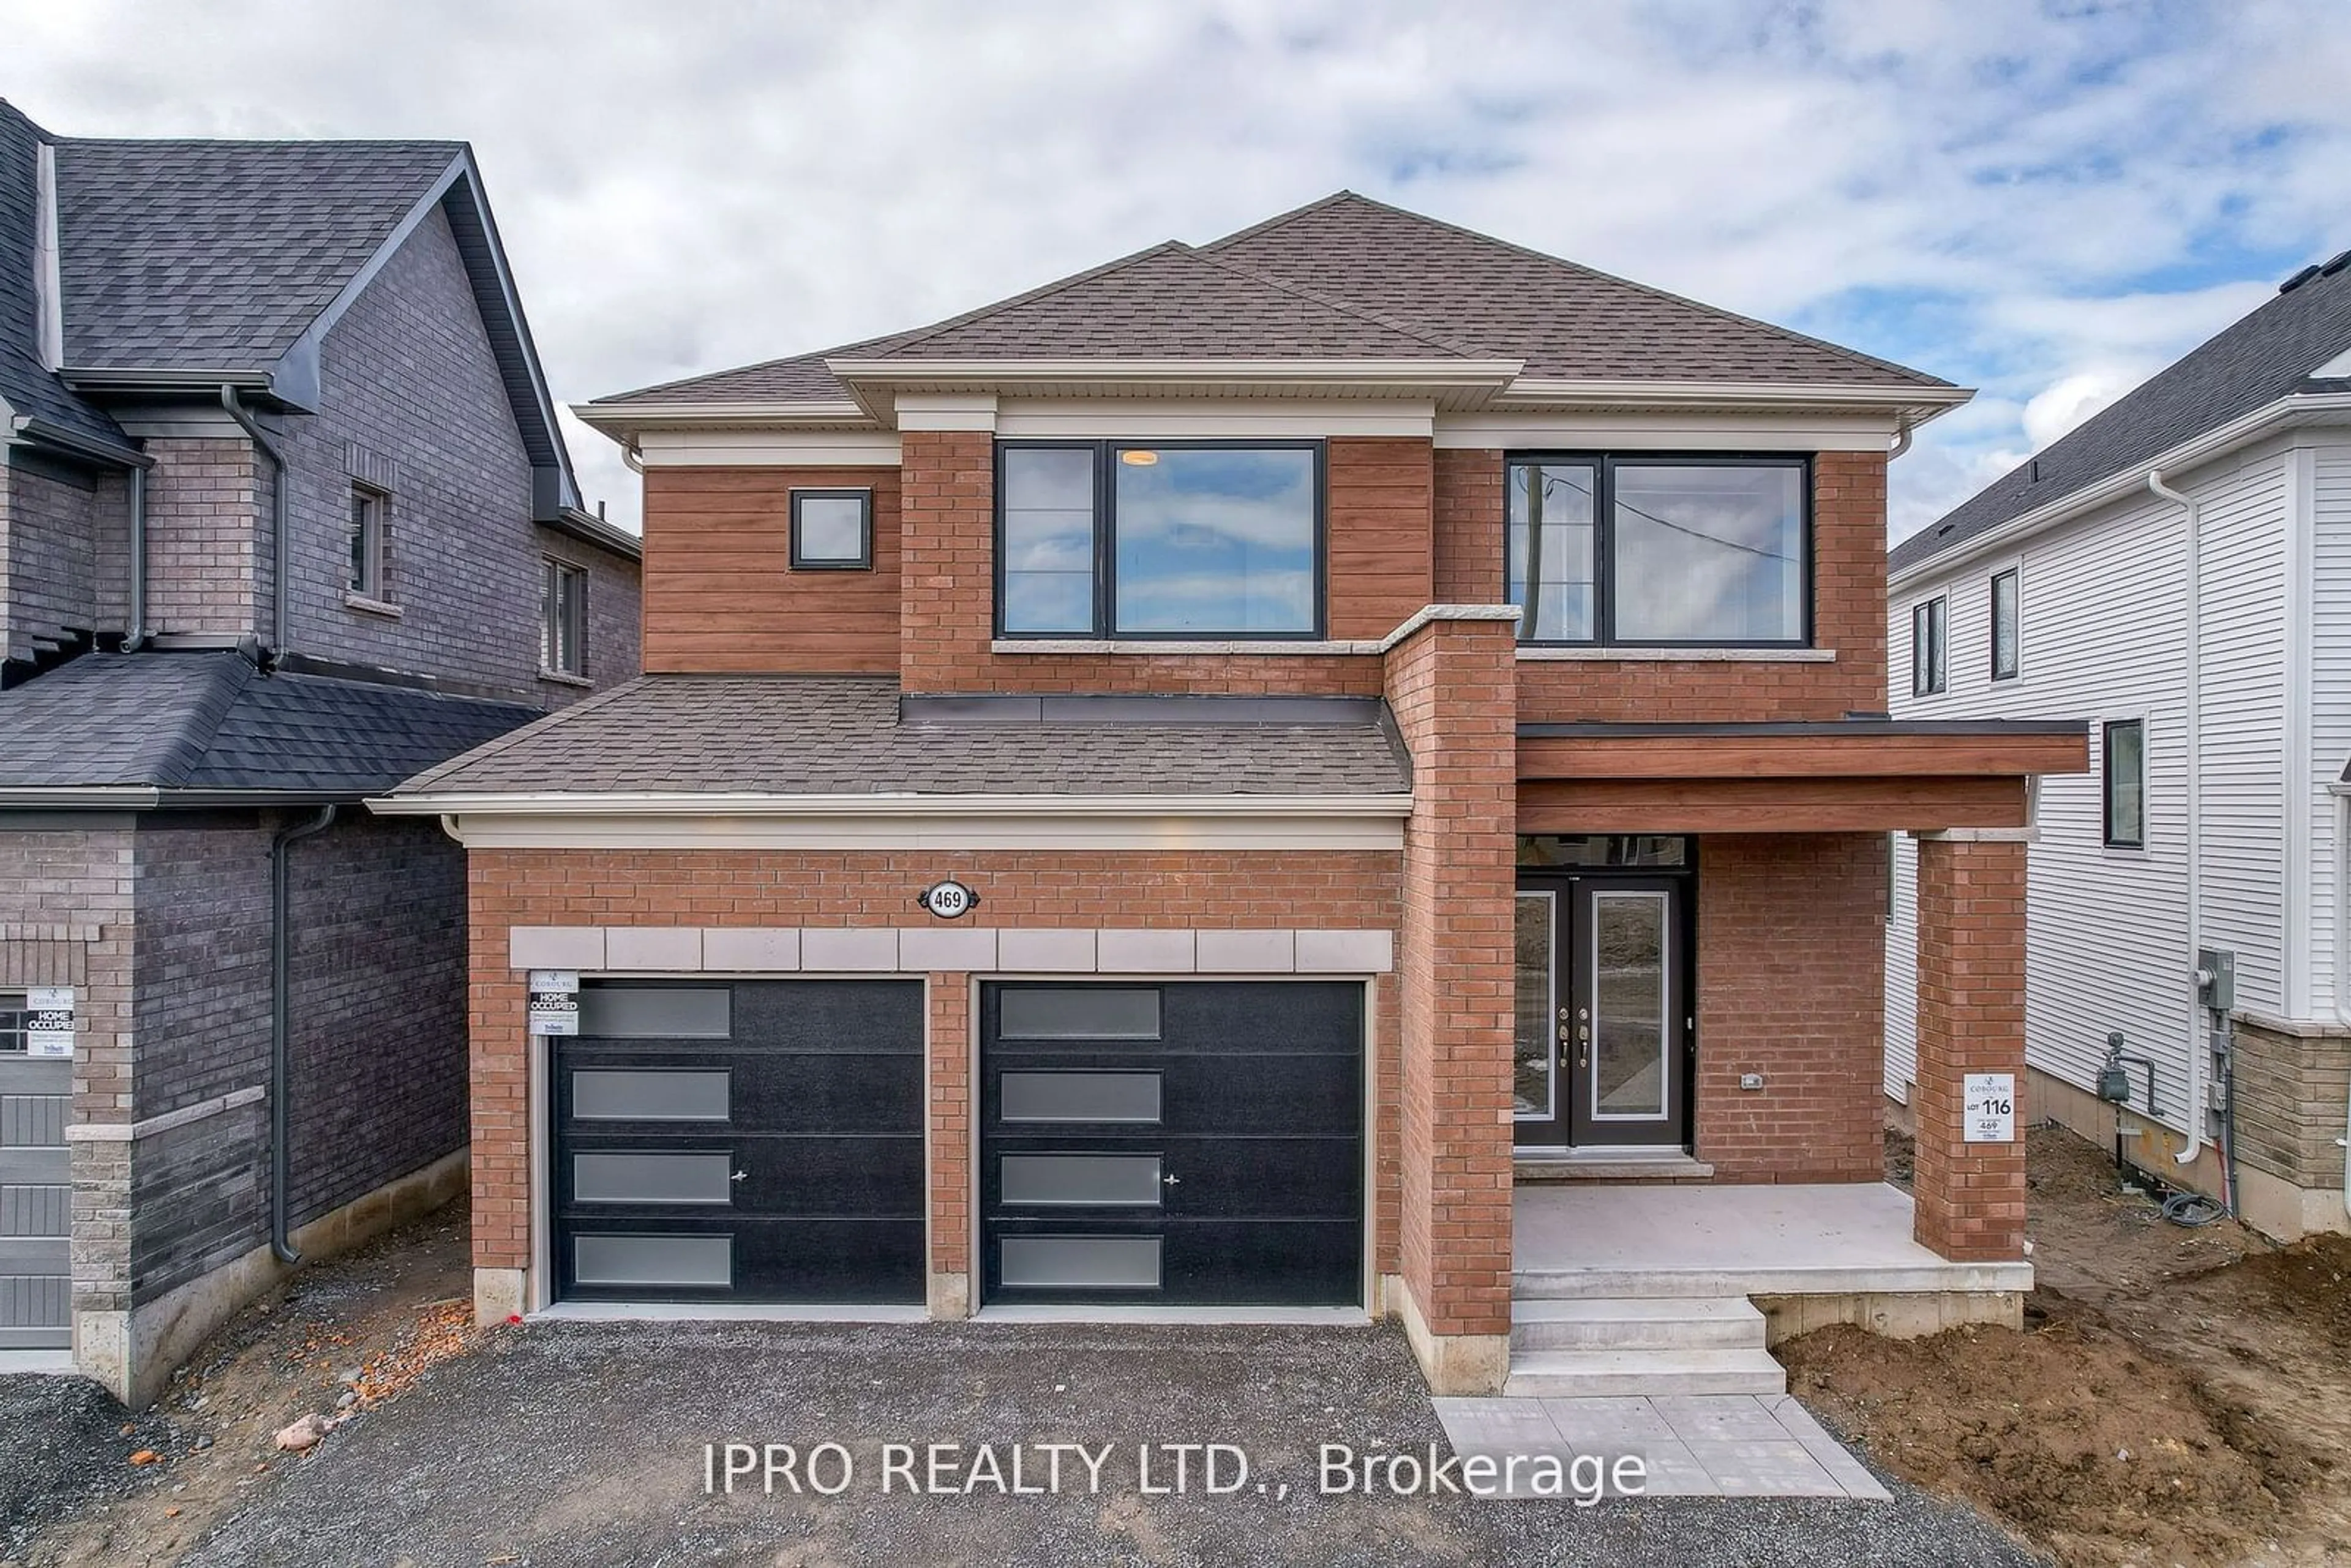 Home with brick exterior material for 469 Hornbeck St, Cobourg Ontario K9A 3T8